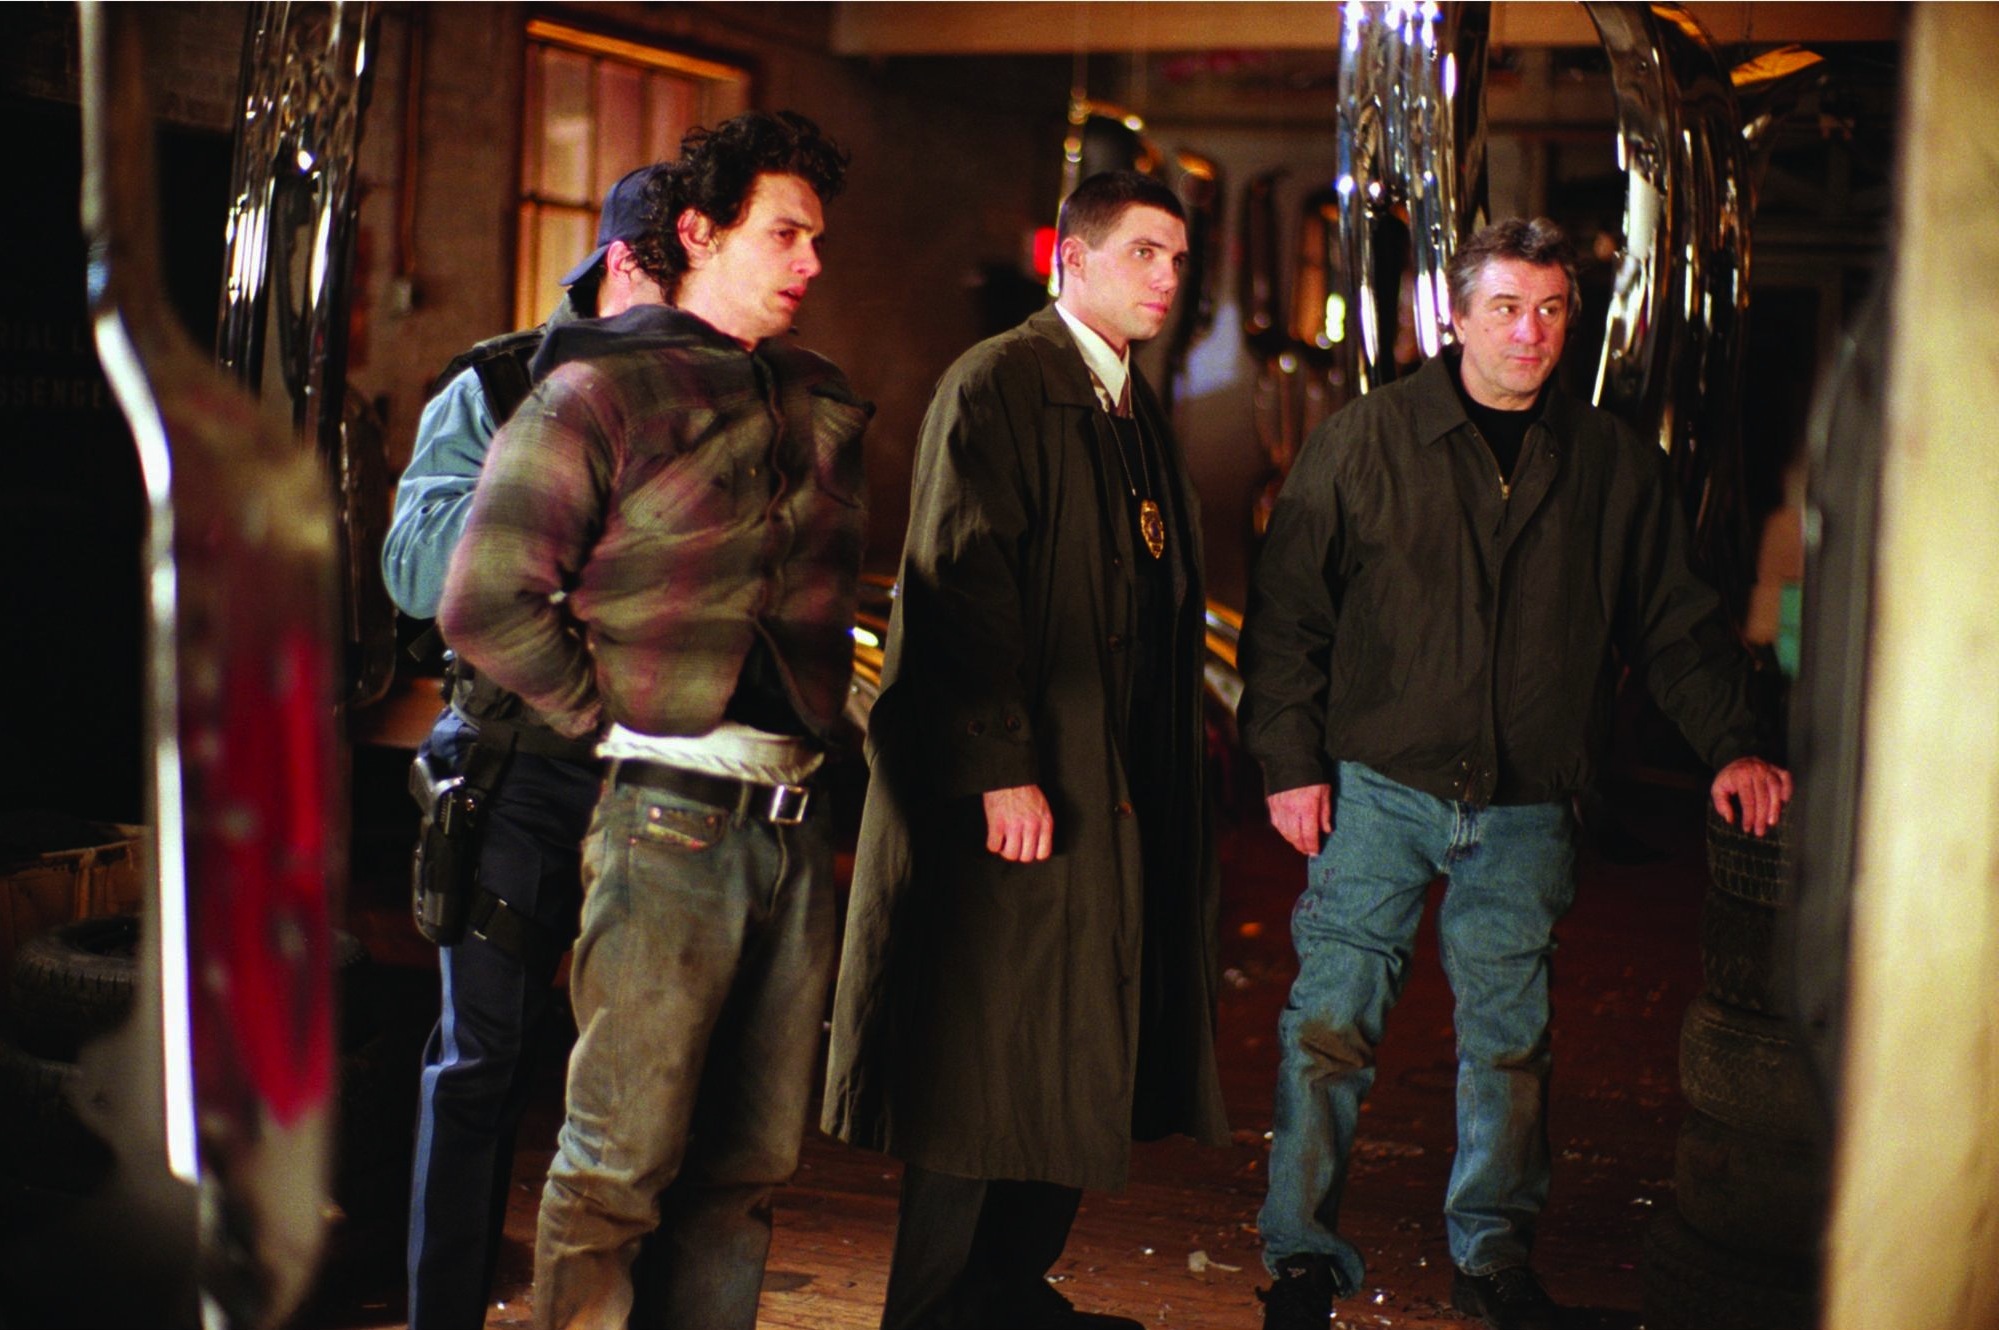 Still of Robert De Niro, Michael Caton-Jones, James Franco and Anson Mount in Miestas prie juros (2002)